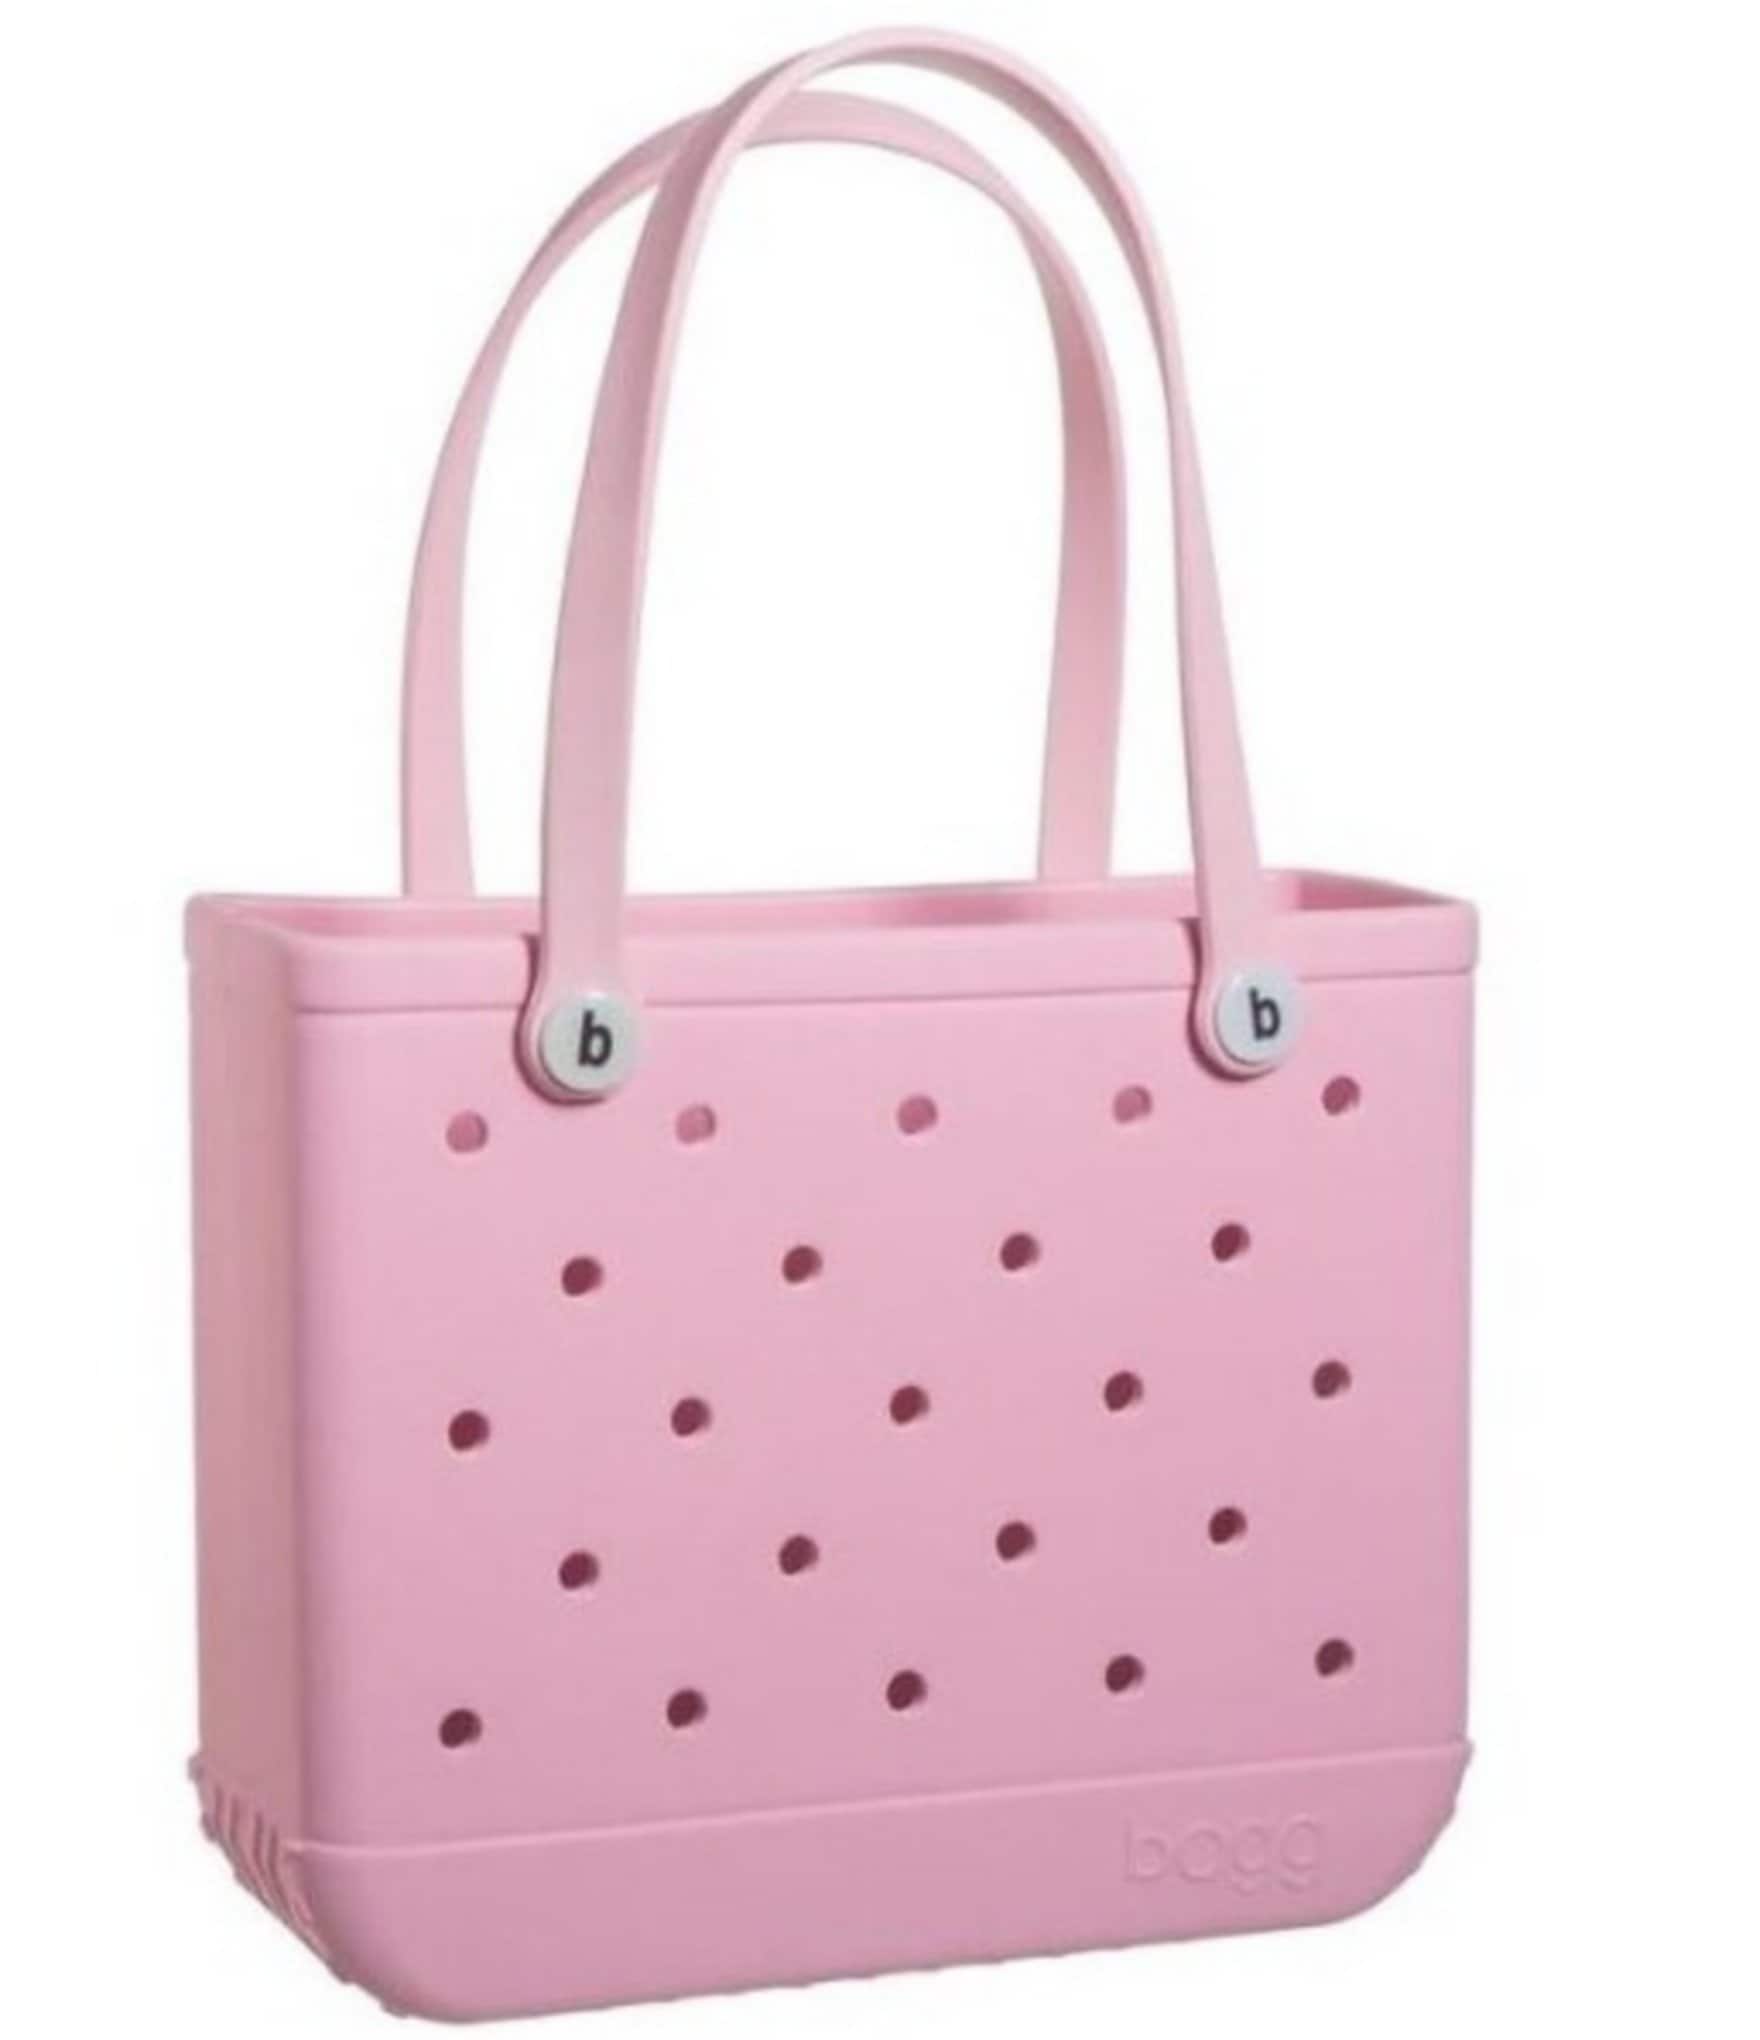 Girls' Backpacks & Bags | Dillard's